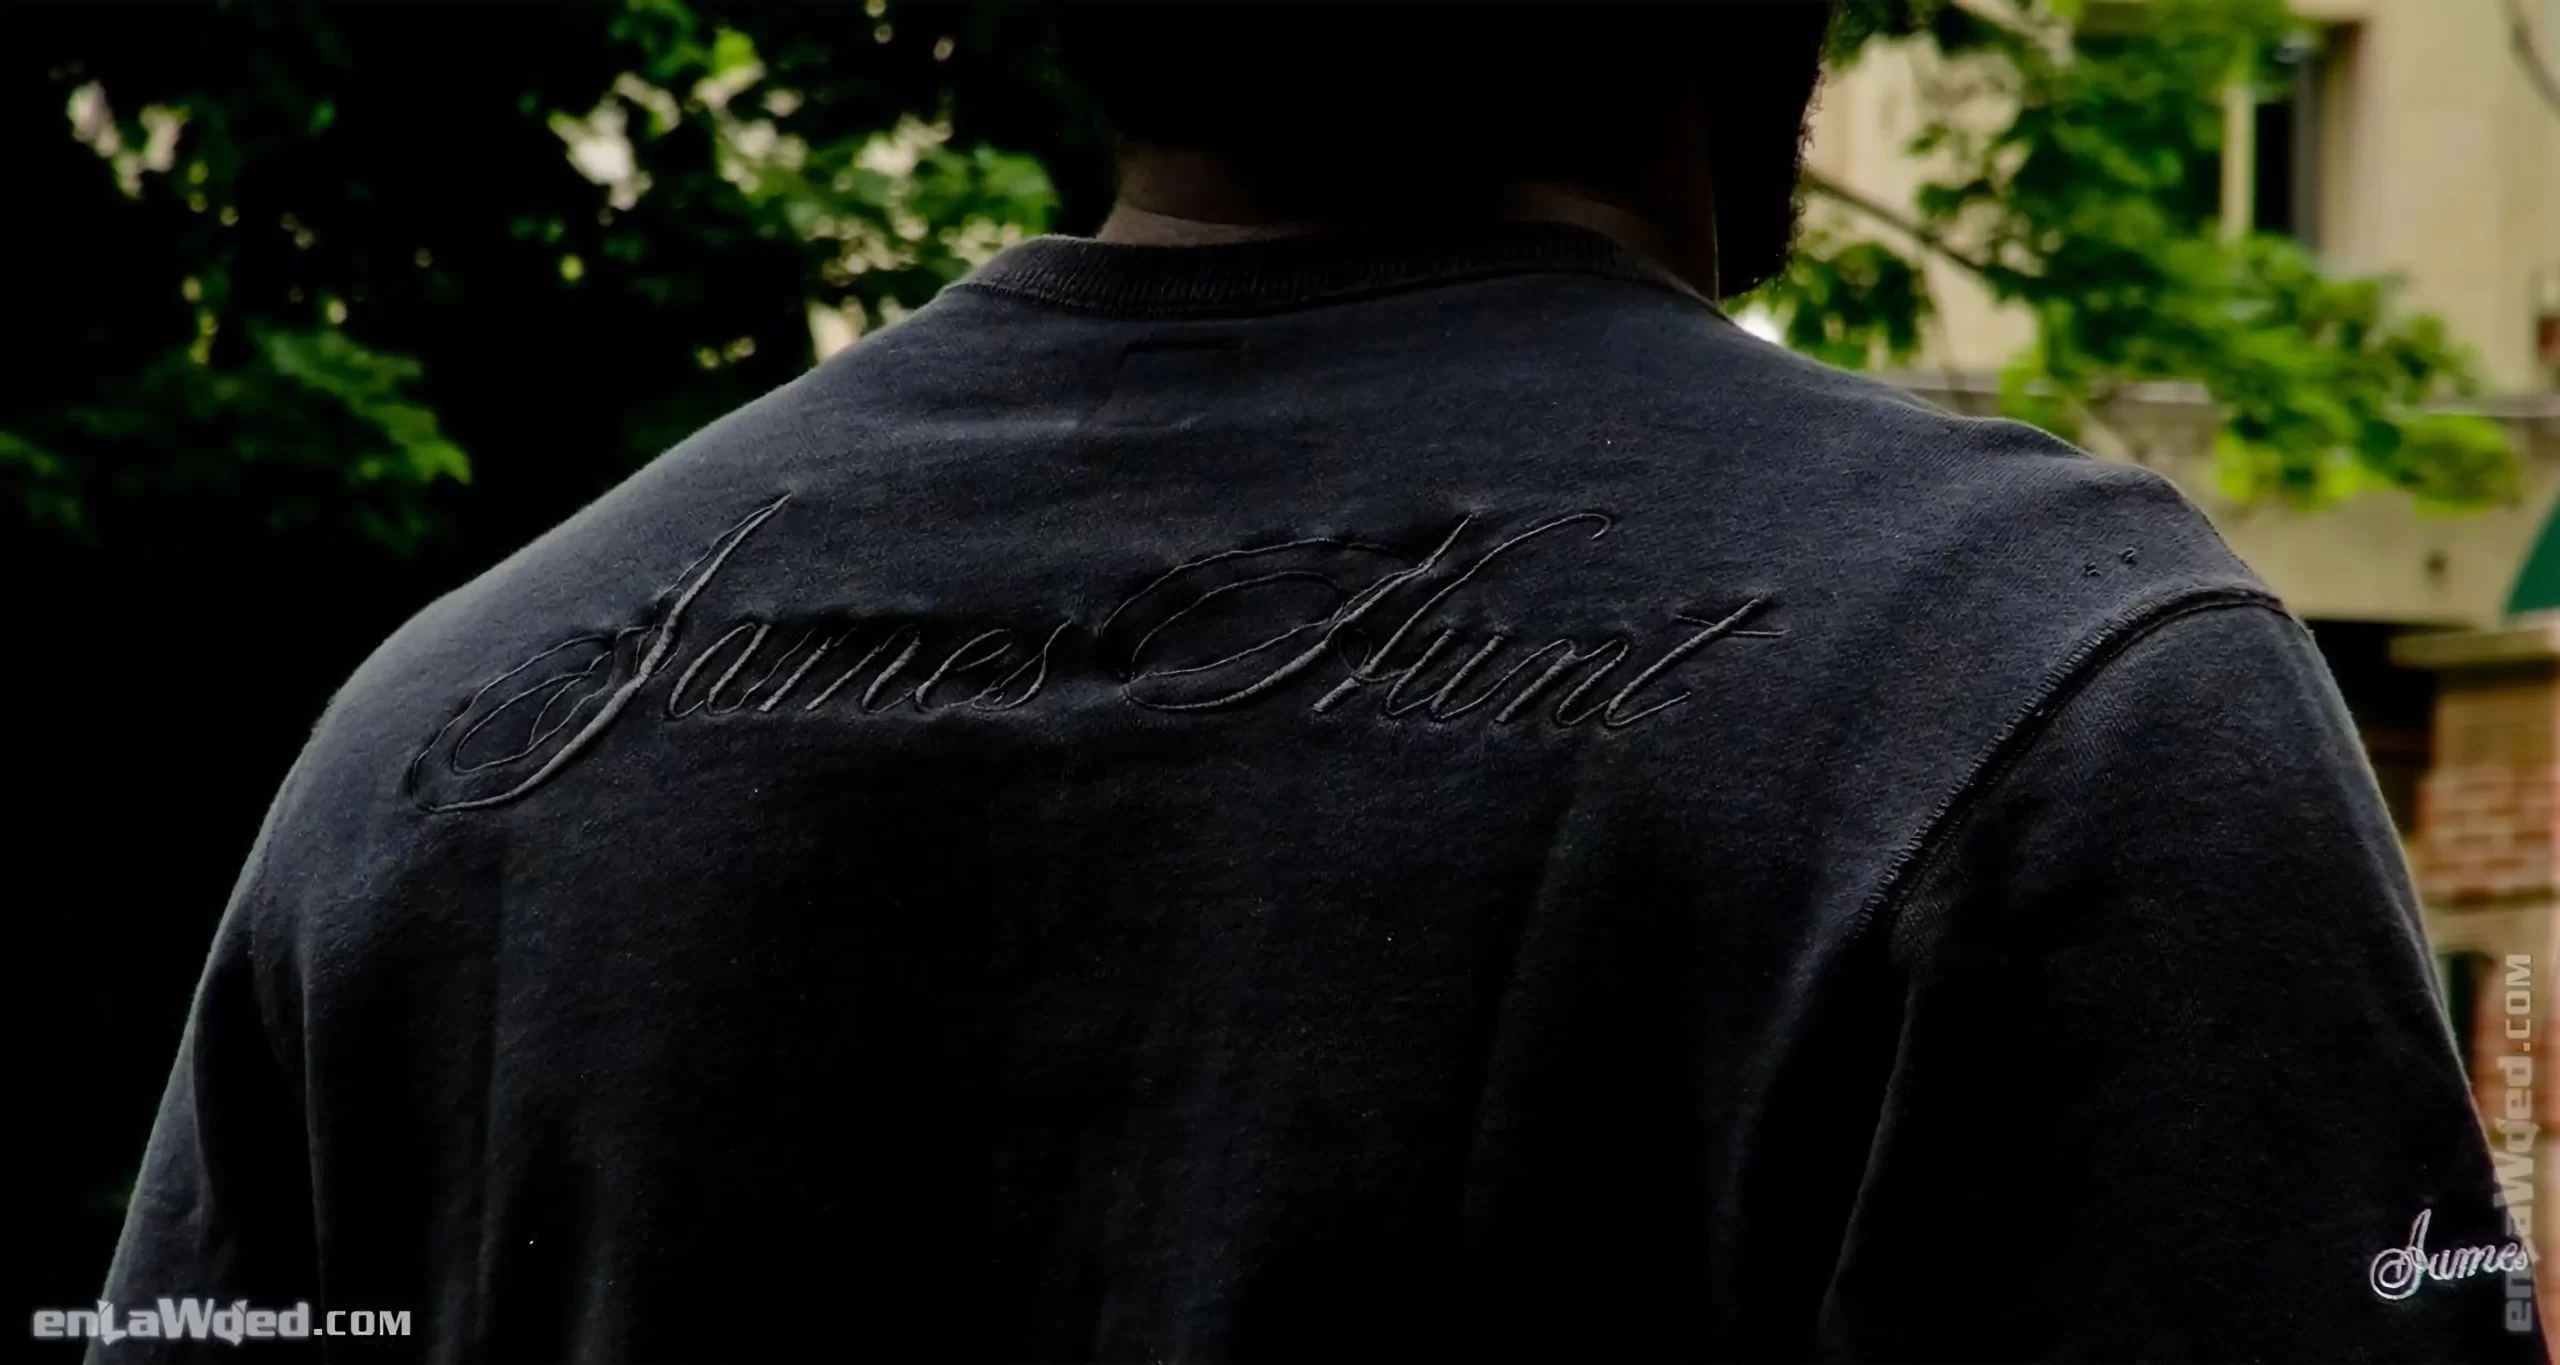 Men’s 2006 James Hunt Player’s Sweatshirt by Adidas: Spunky (EnLawded.com file #lmchk90307ip2y125012kg9st)